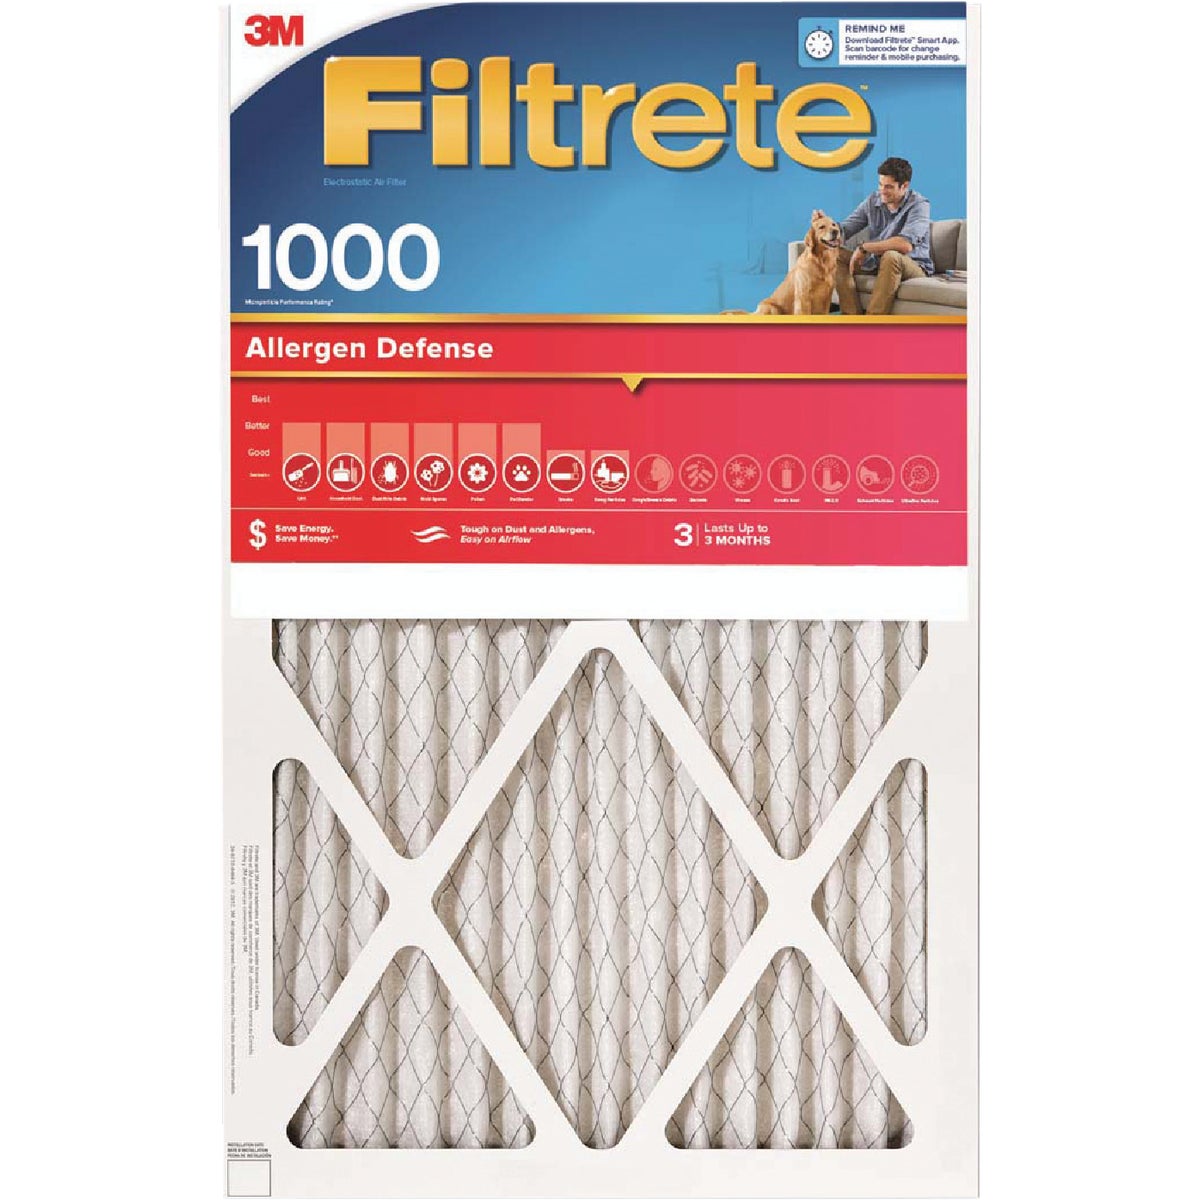 Filtrete 14 In. x 25 In. x 1 In. Allergen Defense 1000/1085 MPR Furnace Filter